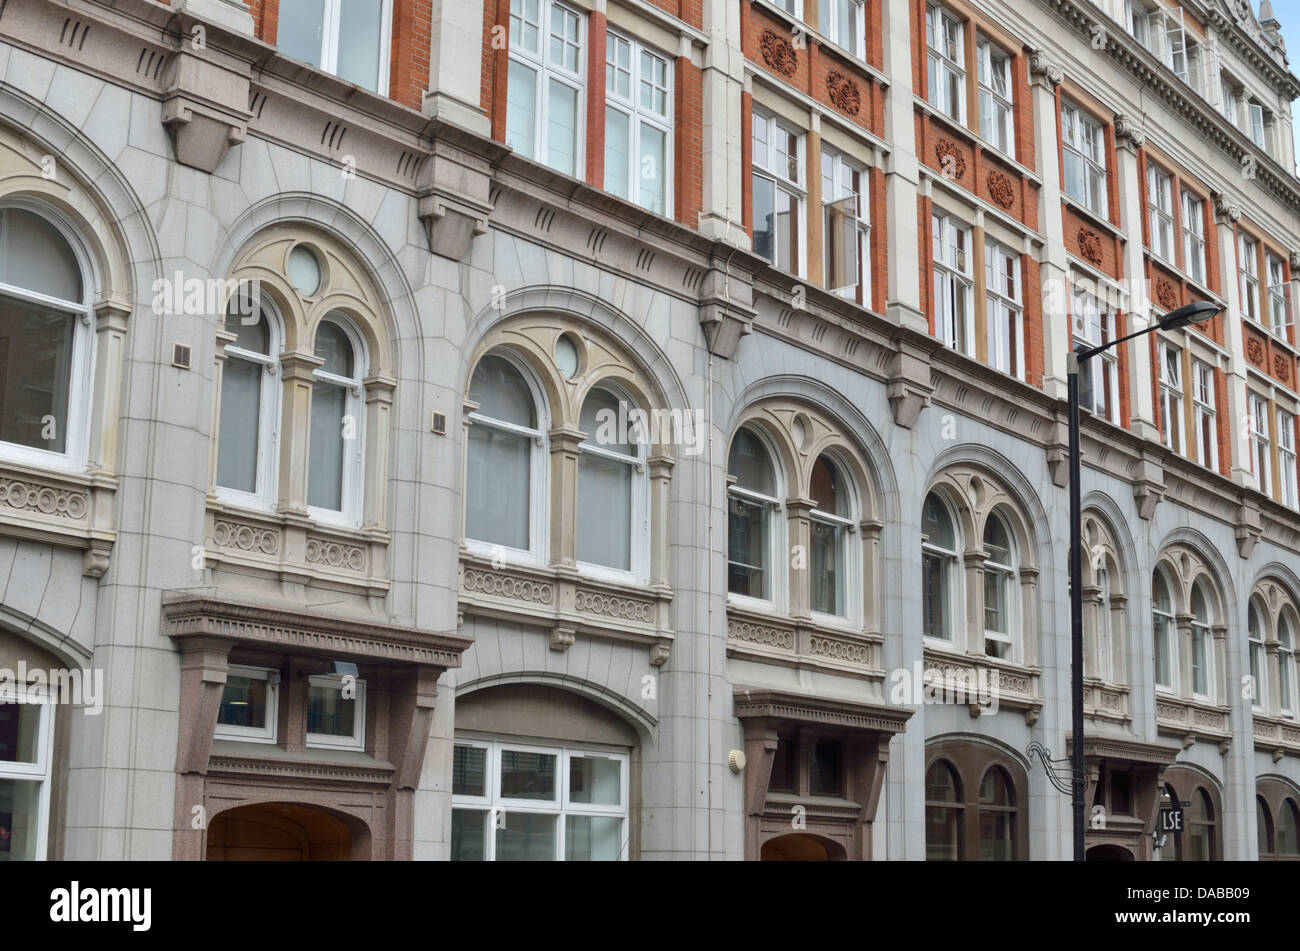 London School of Economics (LSE) Grosvenor House, Drury Lane, Covent Garden, London, UK. Stock Photo